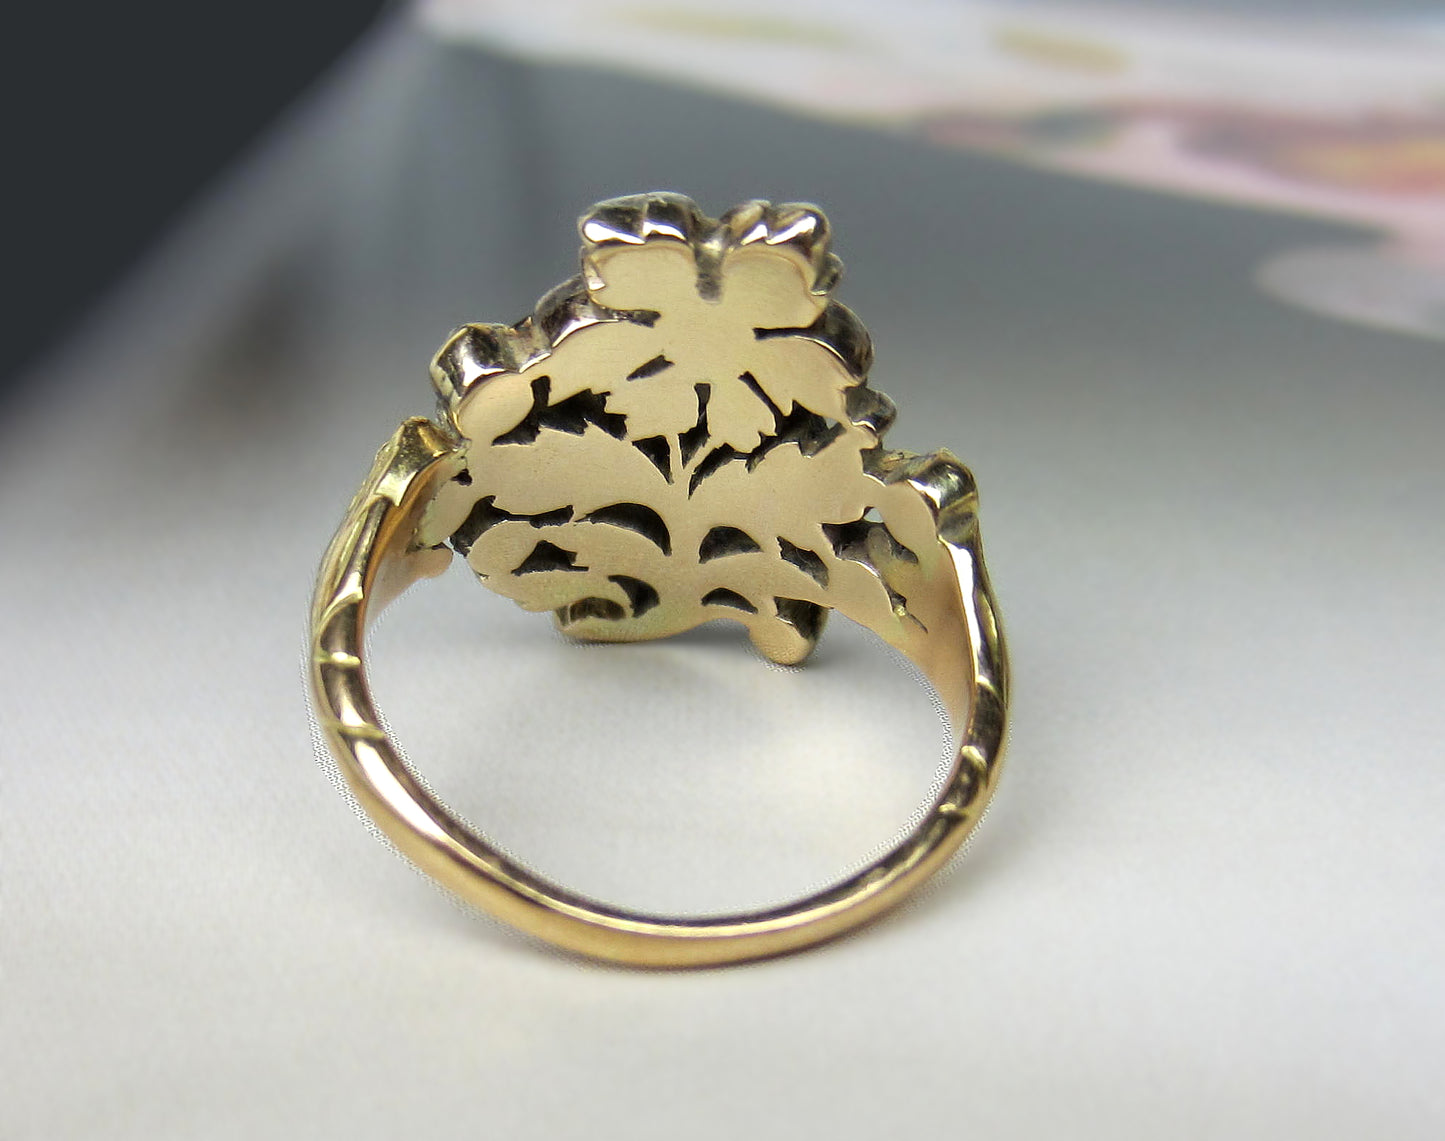 SOLD--Georgian Diamond Giardinetti Ring Silver/15k c. 1800